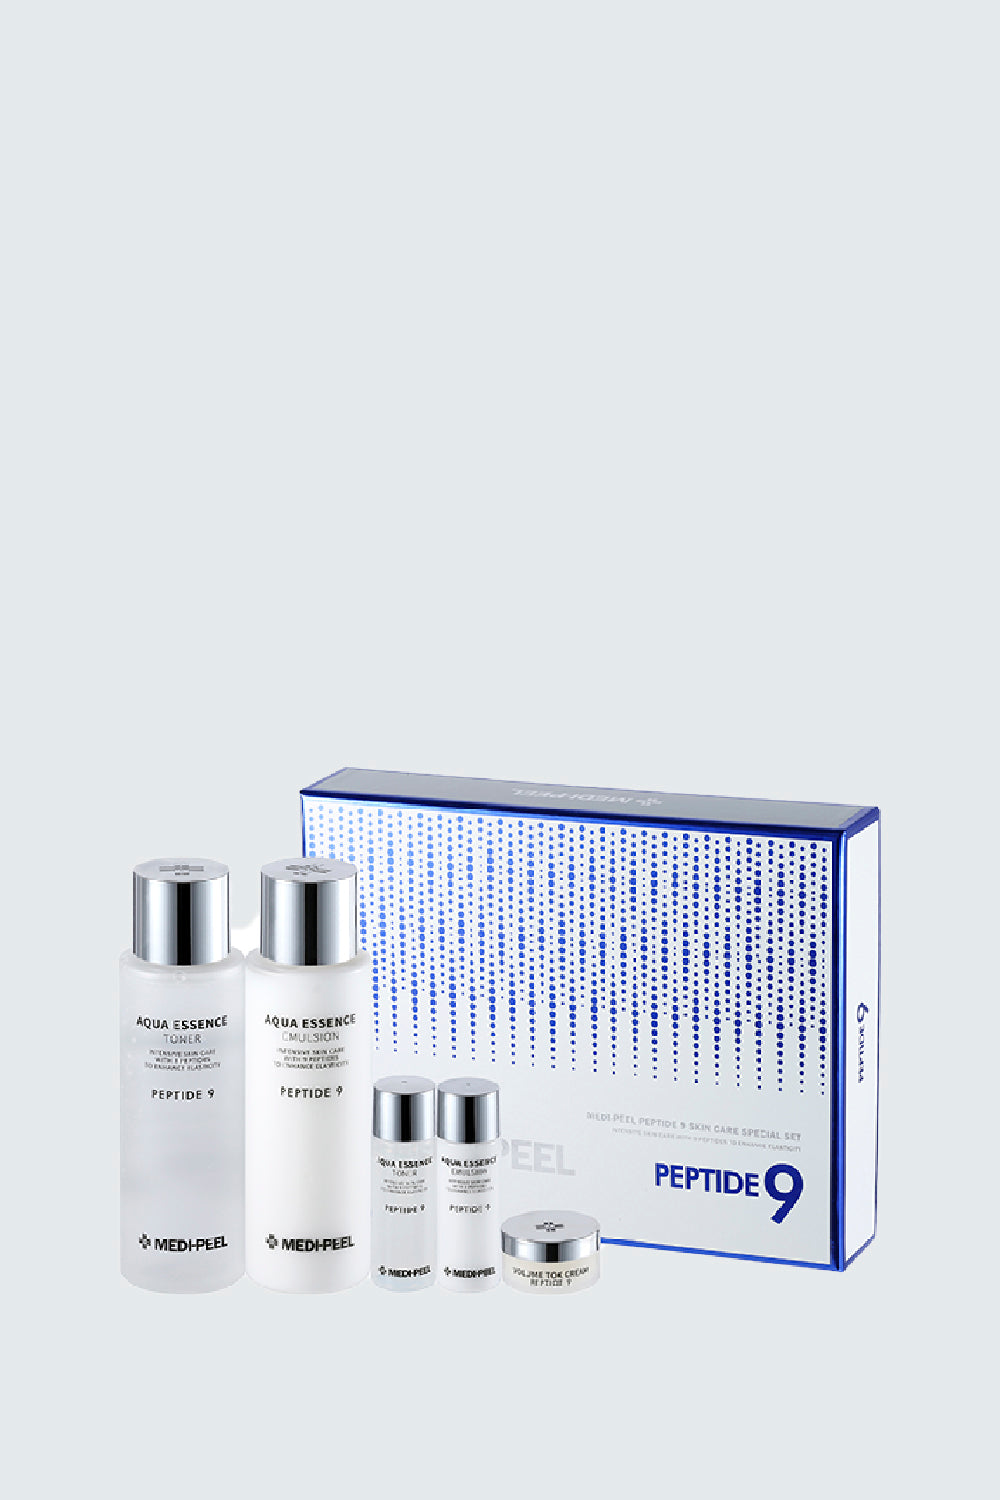 Peptide9 Skin Care Special Set - 250ml x 2 ea, 30ml x 2ea, 10g MEDI-PEEL